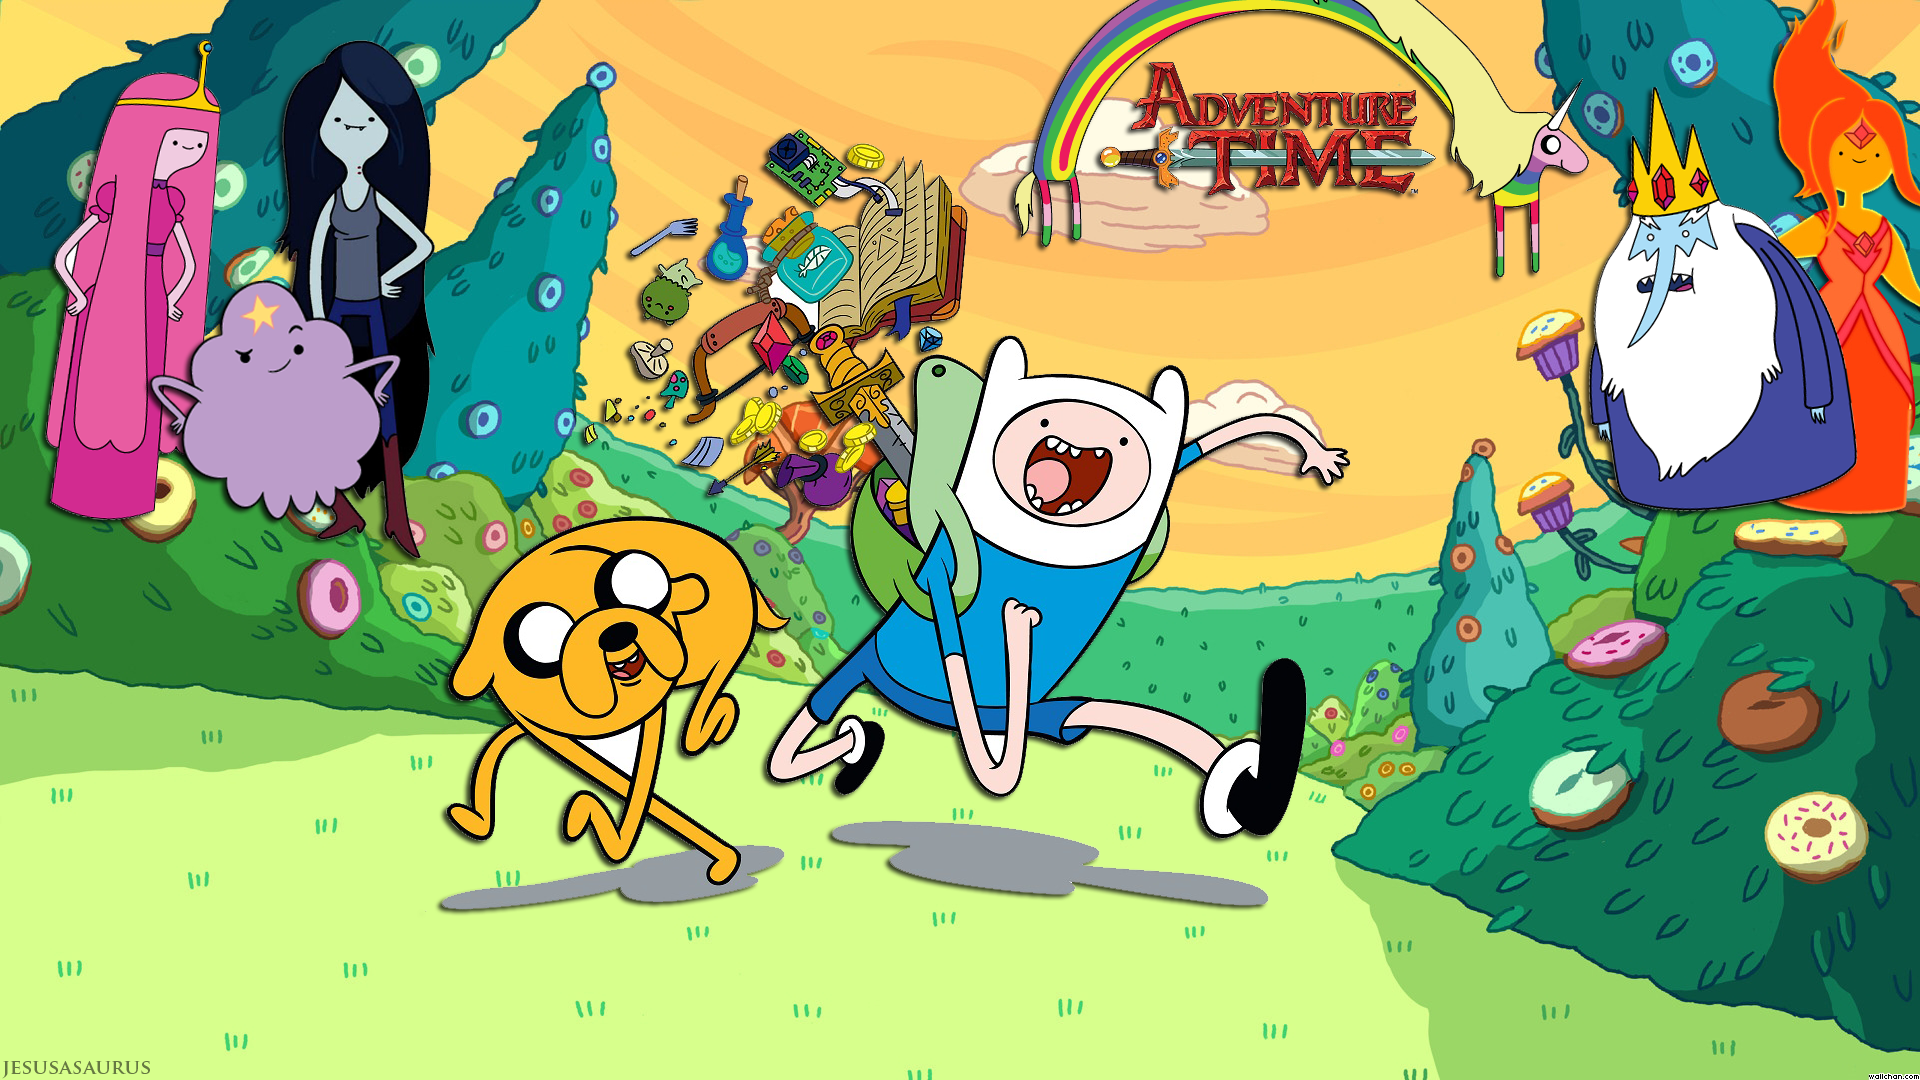 Little Orbit and Cartoon Network Announce Adventure Time The Secret